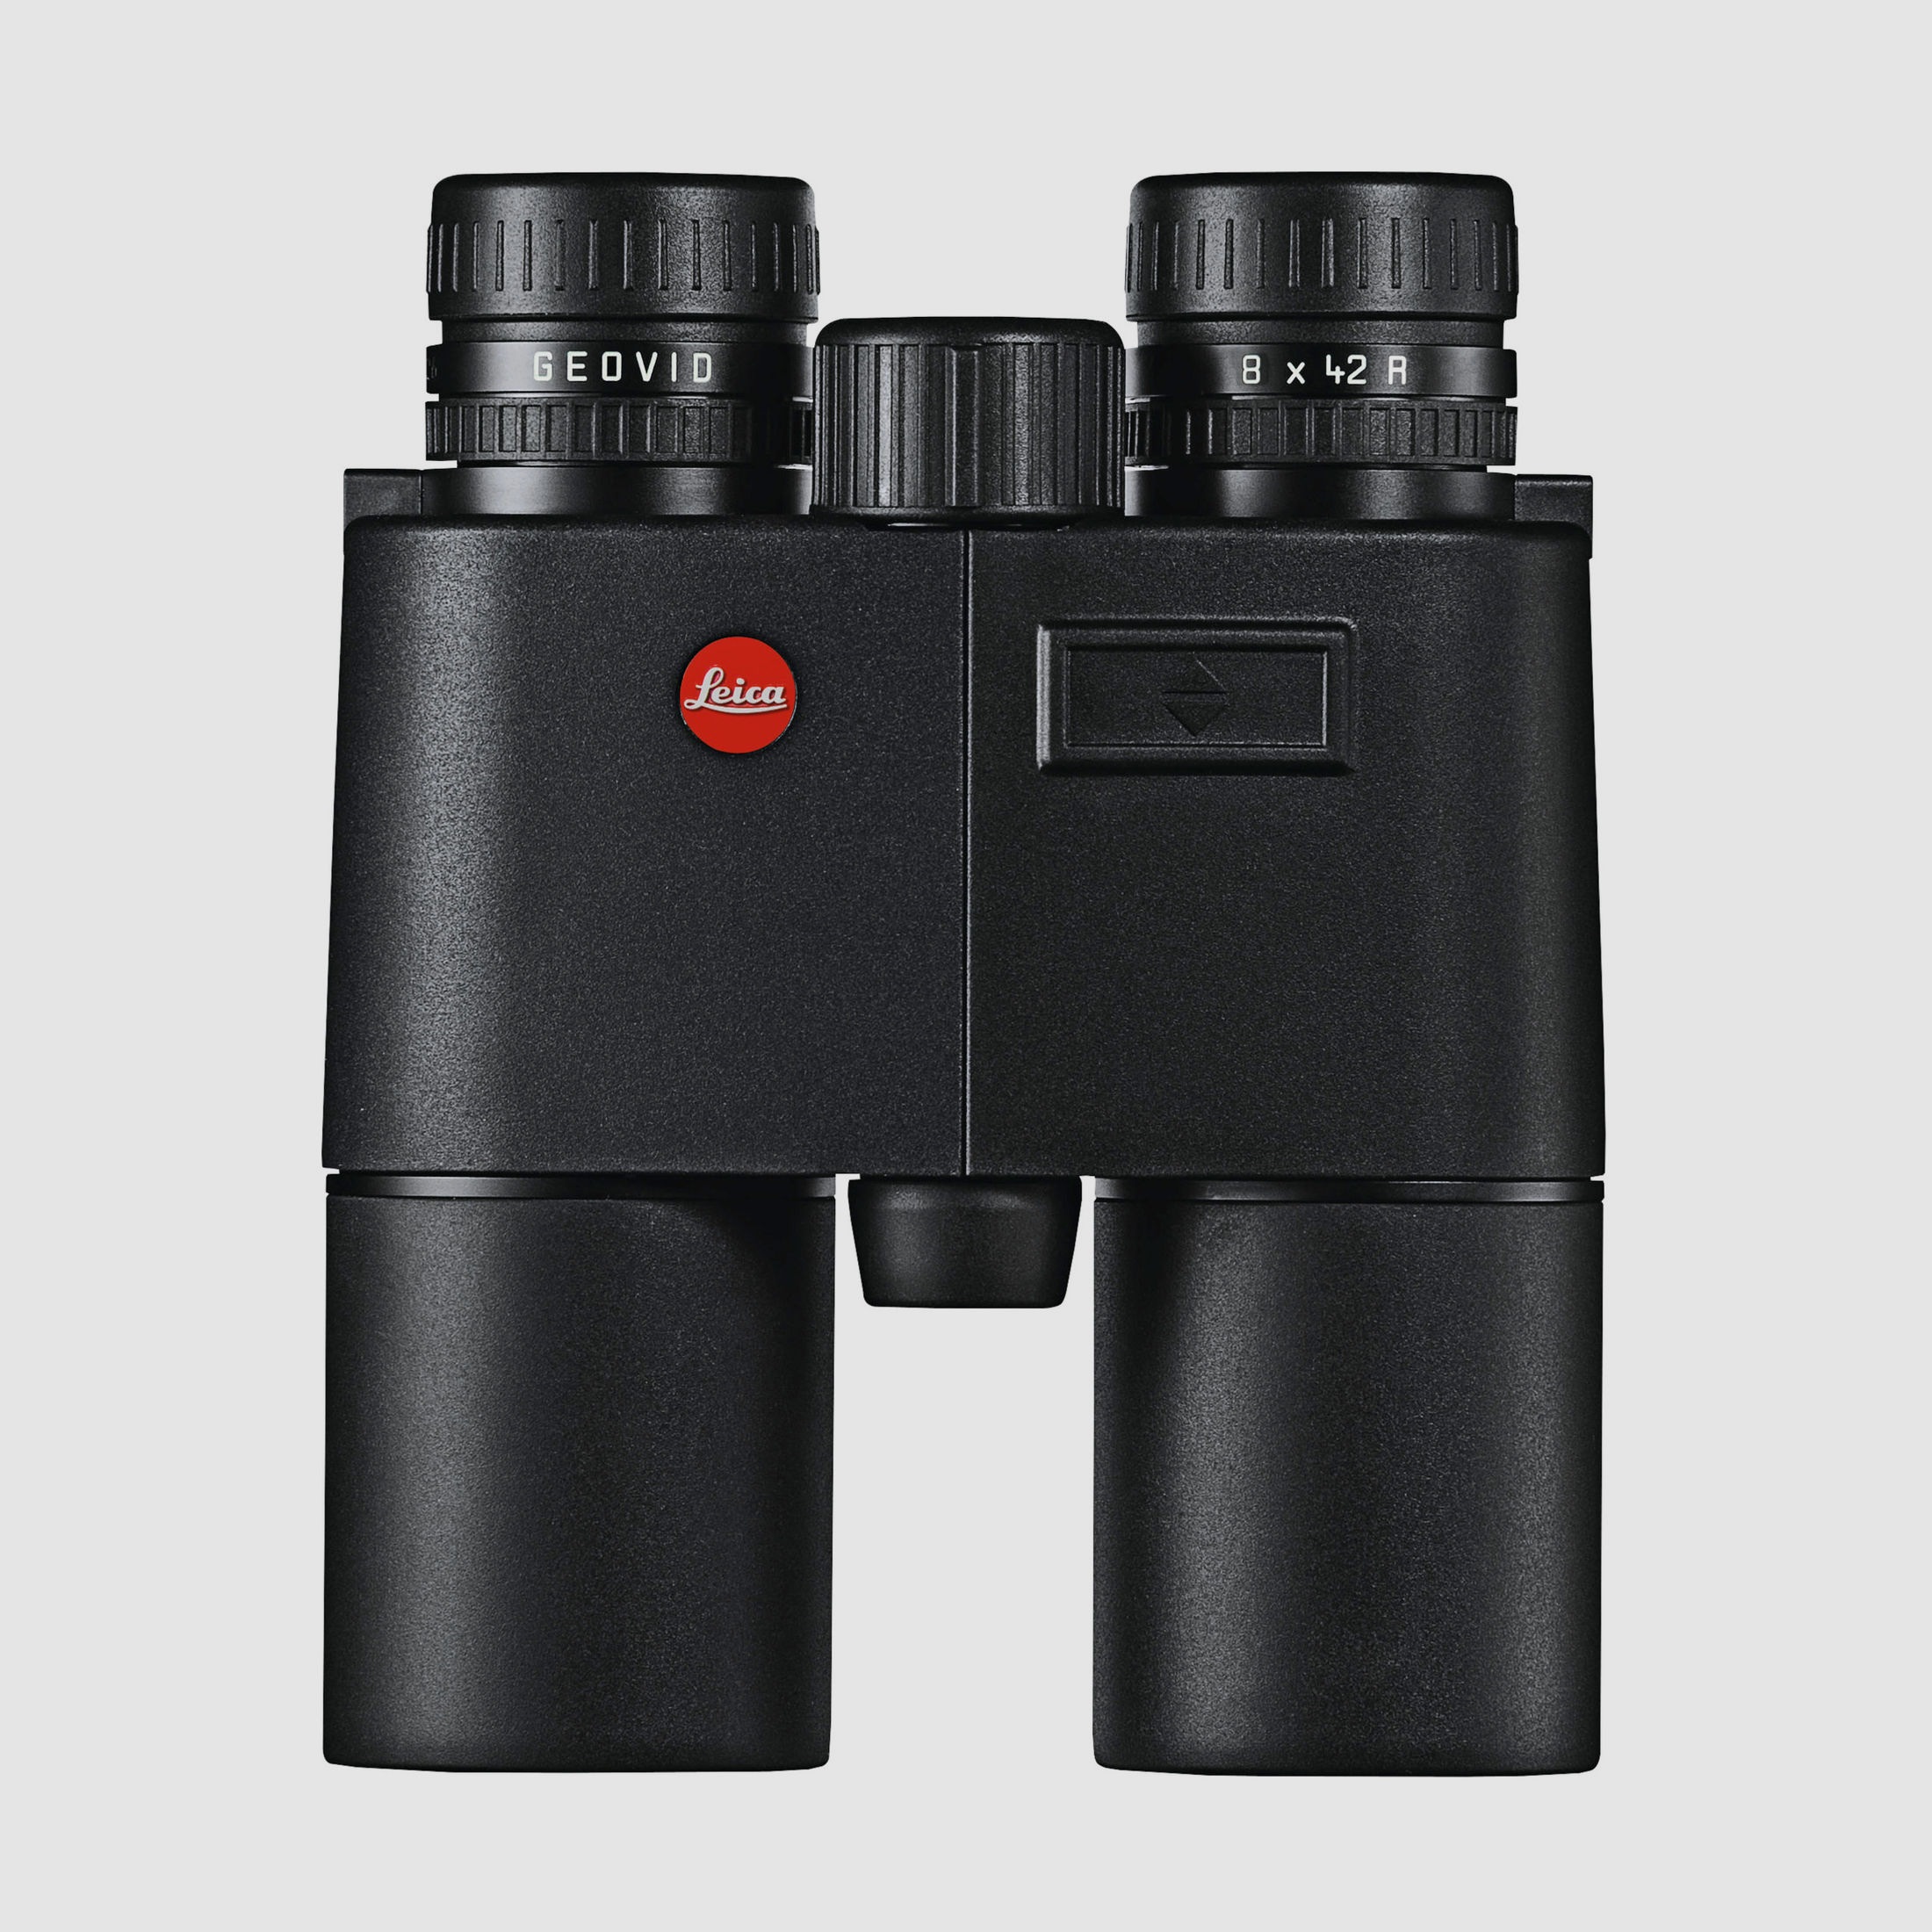 Leica GEOVID 8x42 R (Meter-Version) Fernglas